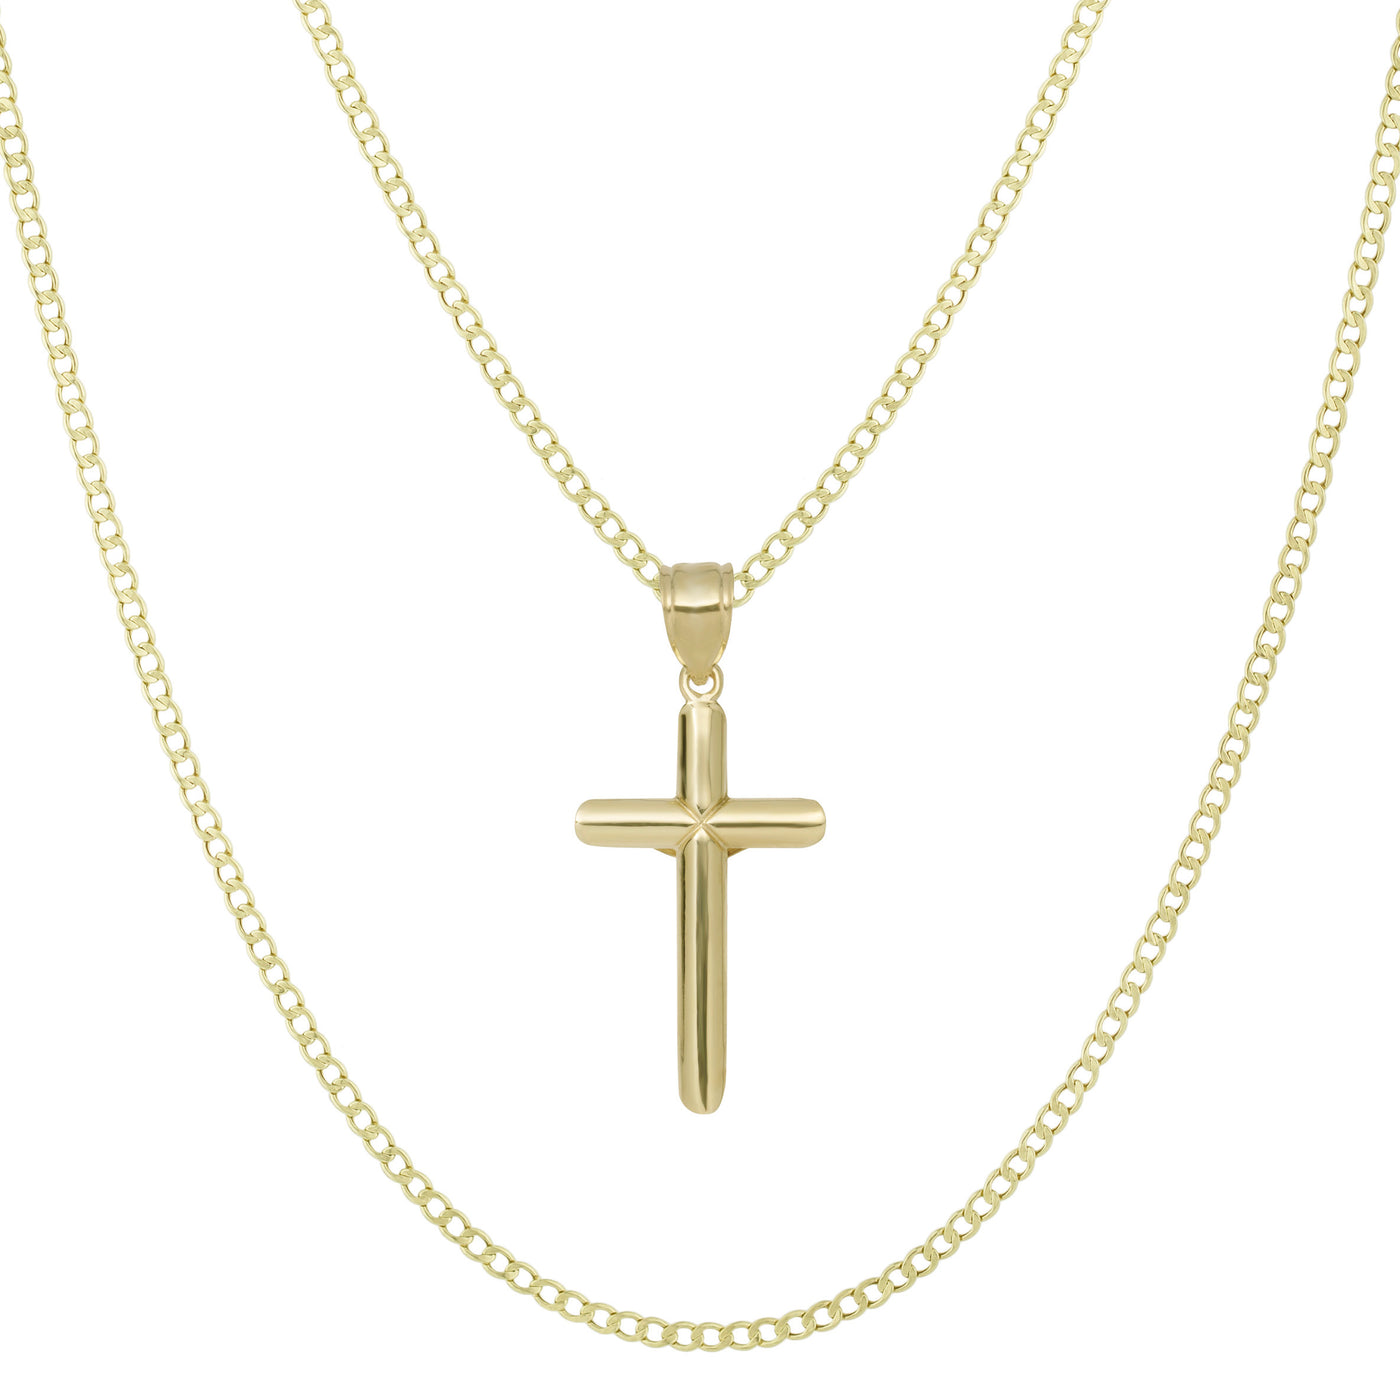 1 3/4" Jesus Cross Crucifix Pendant & Chain Necklace Set 10K Yellow White Gold